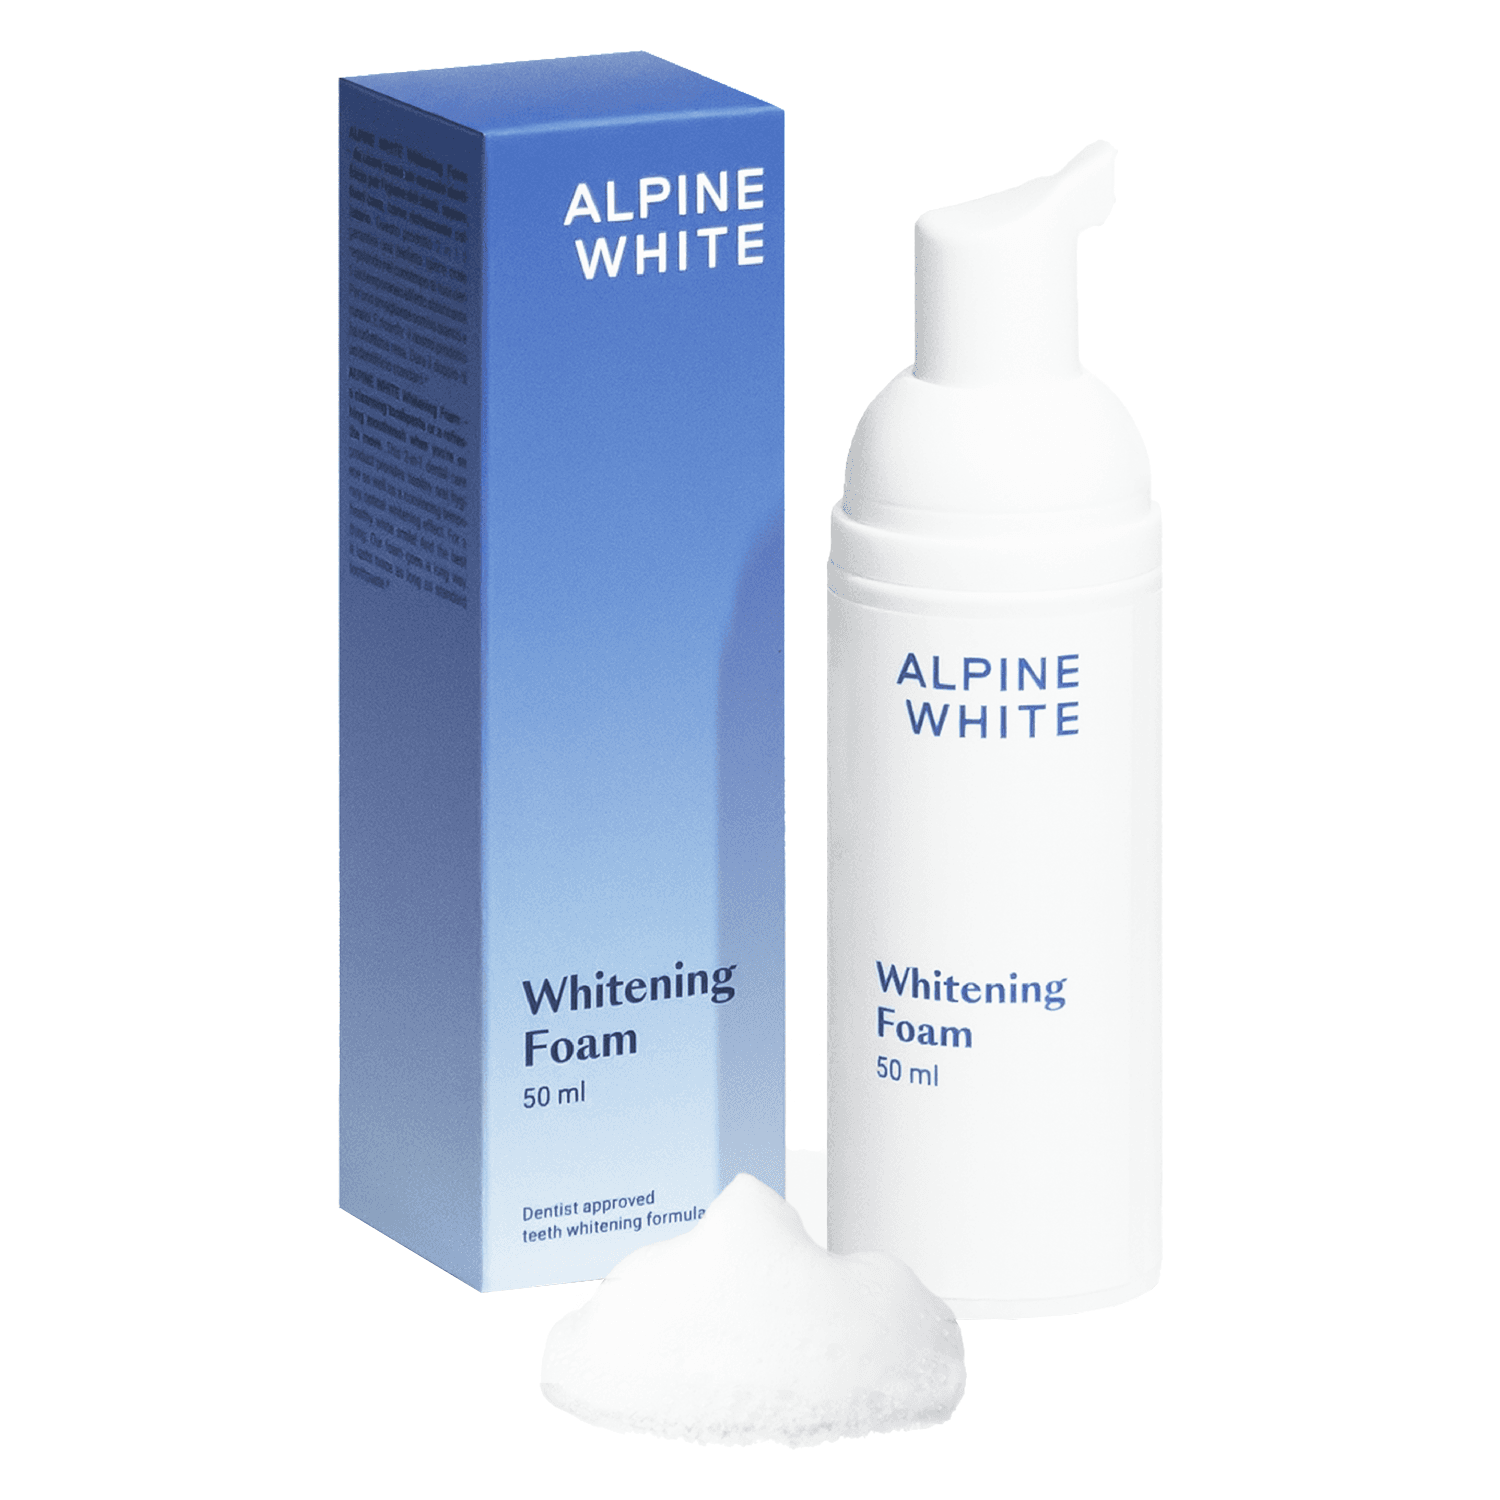 ALPINE WHITE - Whitening Foam